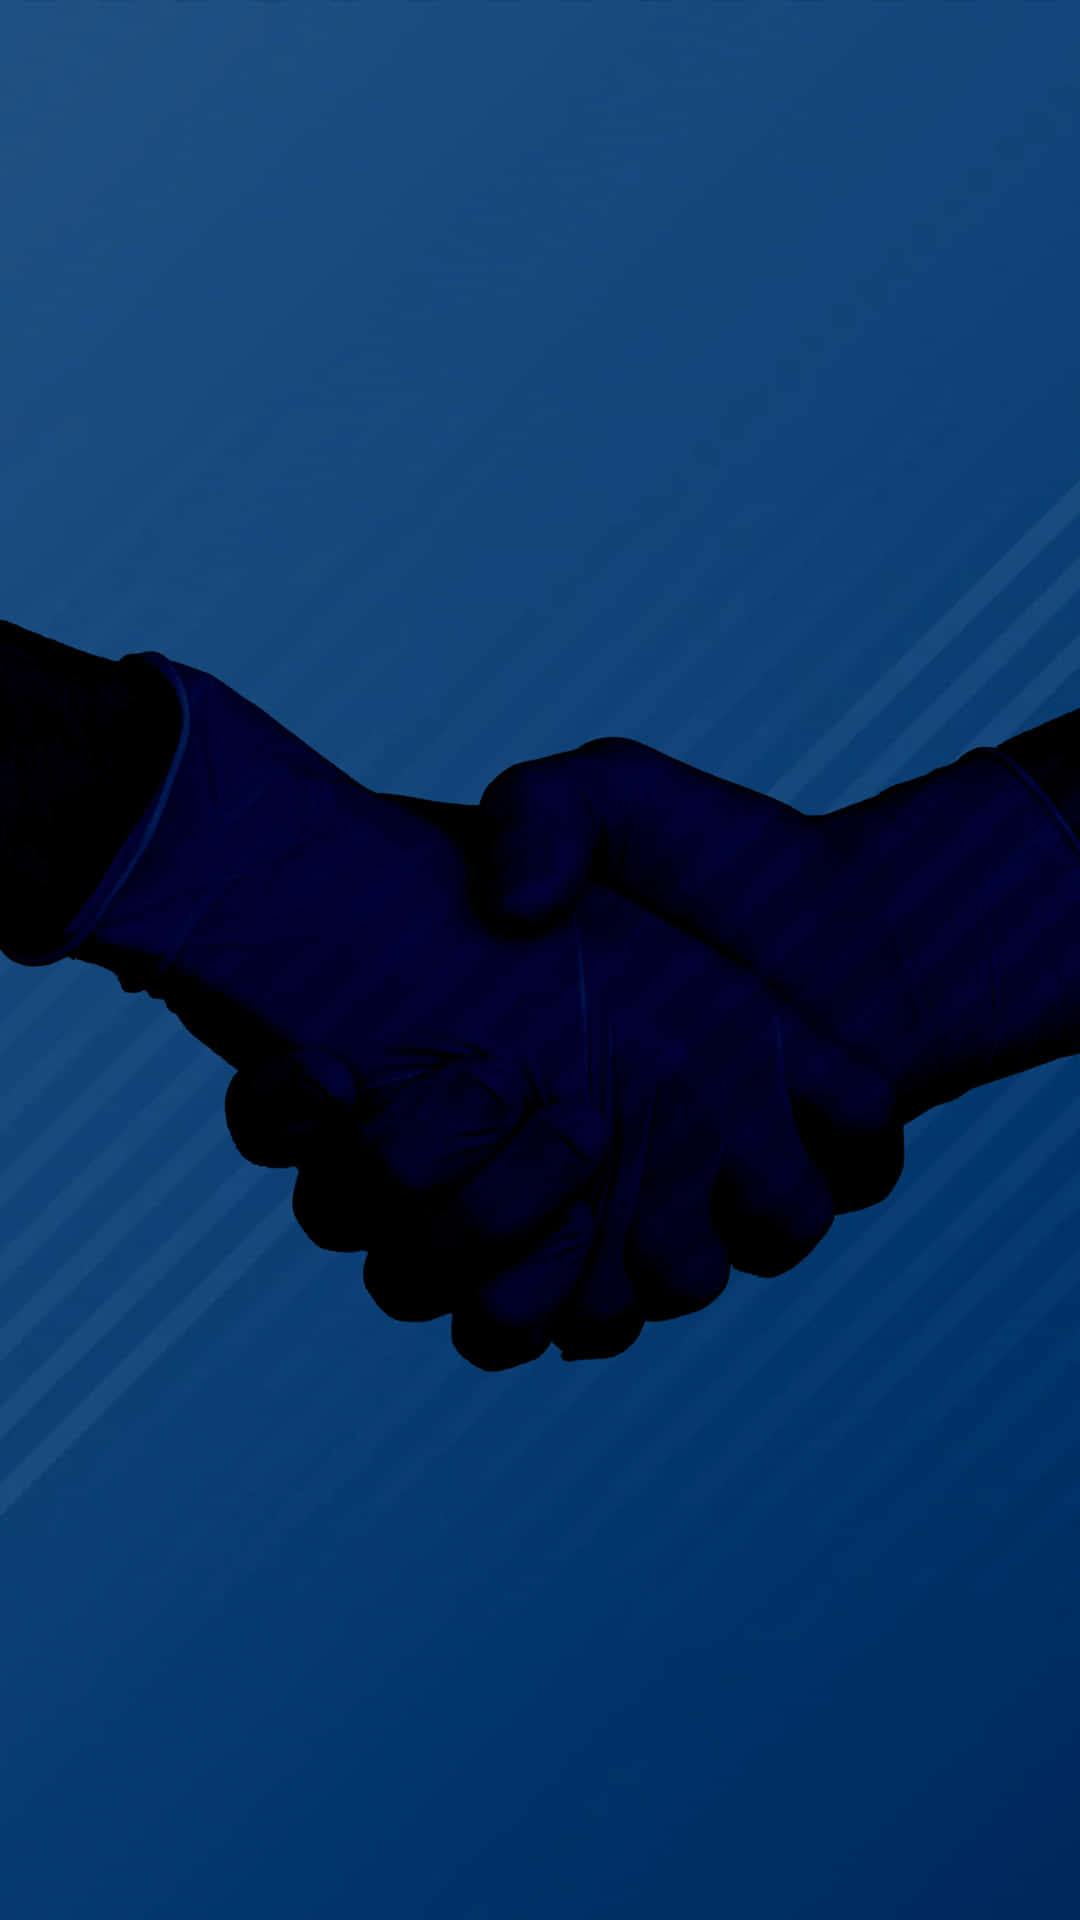 Blue Handshake Silhouette Wallpaper